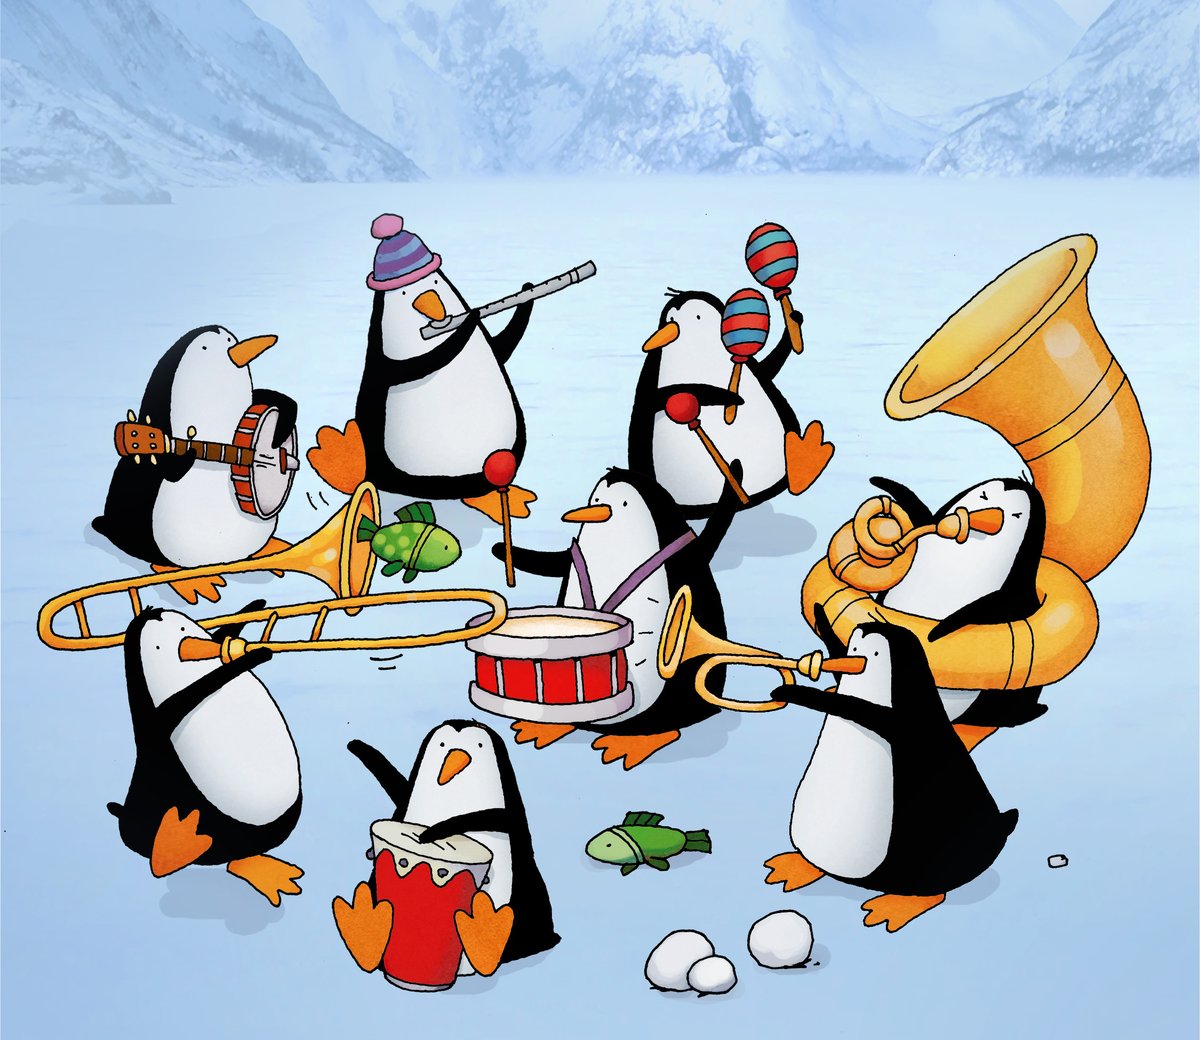 Happy International Penguin Day!
#penguin #band #jam #childrensillustration #illustrationartists #kidlitart #childrensbooks #kidlit #kidlitartist #illustration #picturebookartist